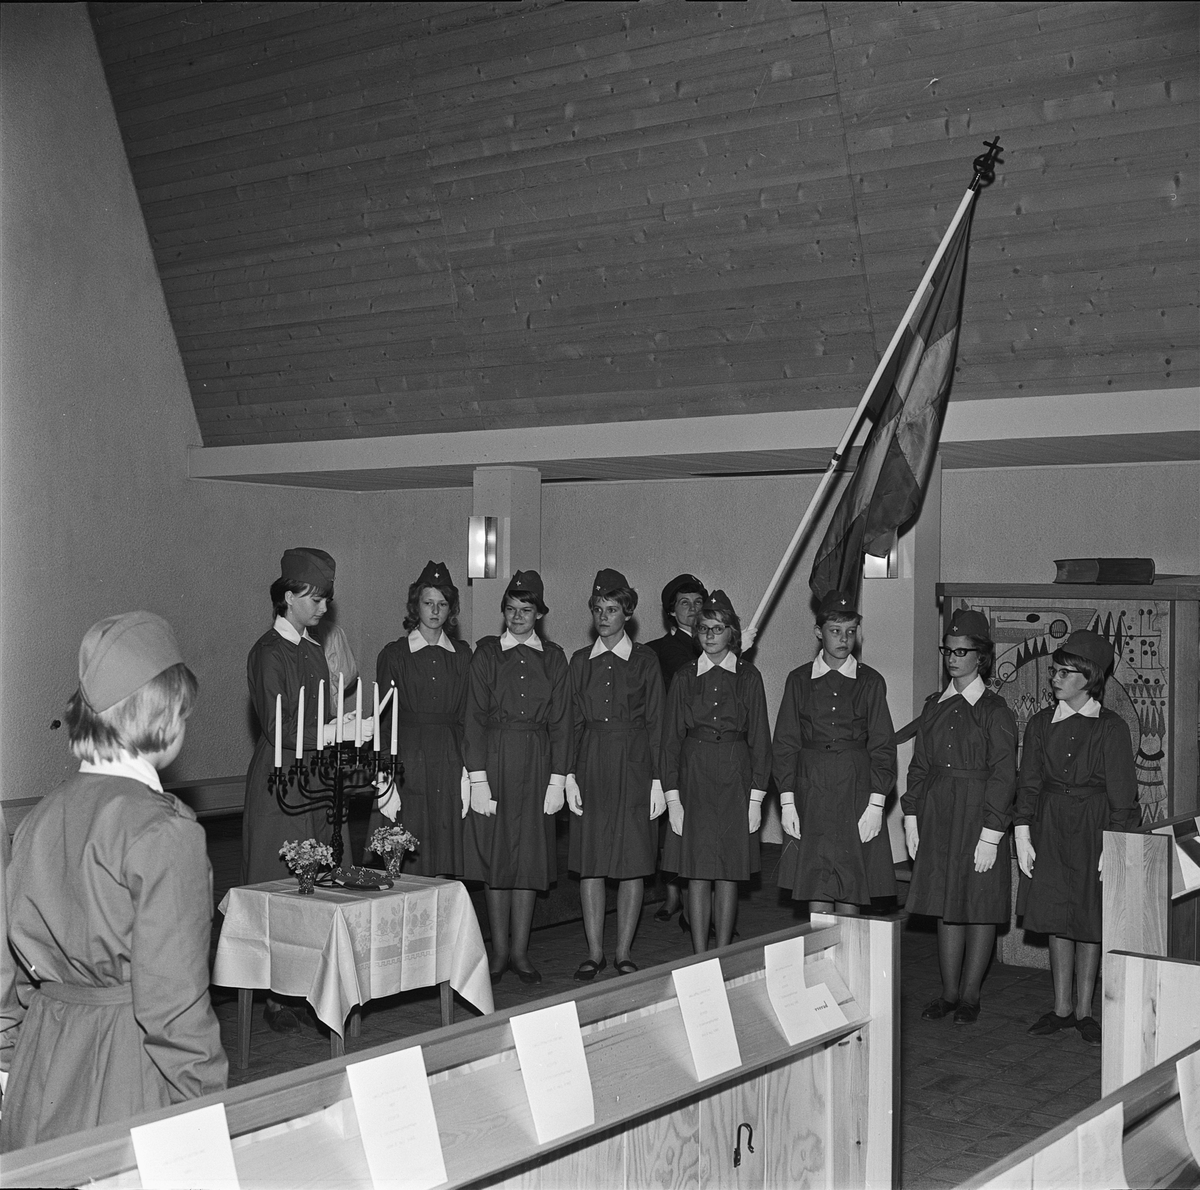 Unglottainvigning i Eriksbergskyrkan, Uppsala 1963